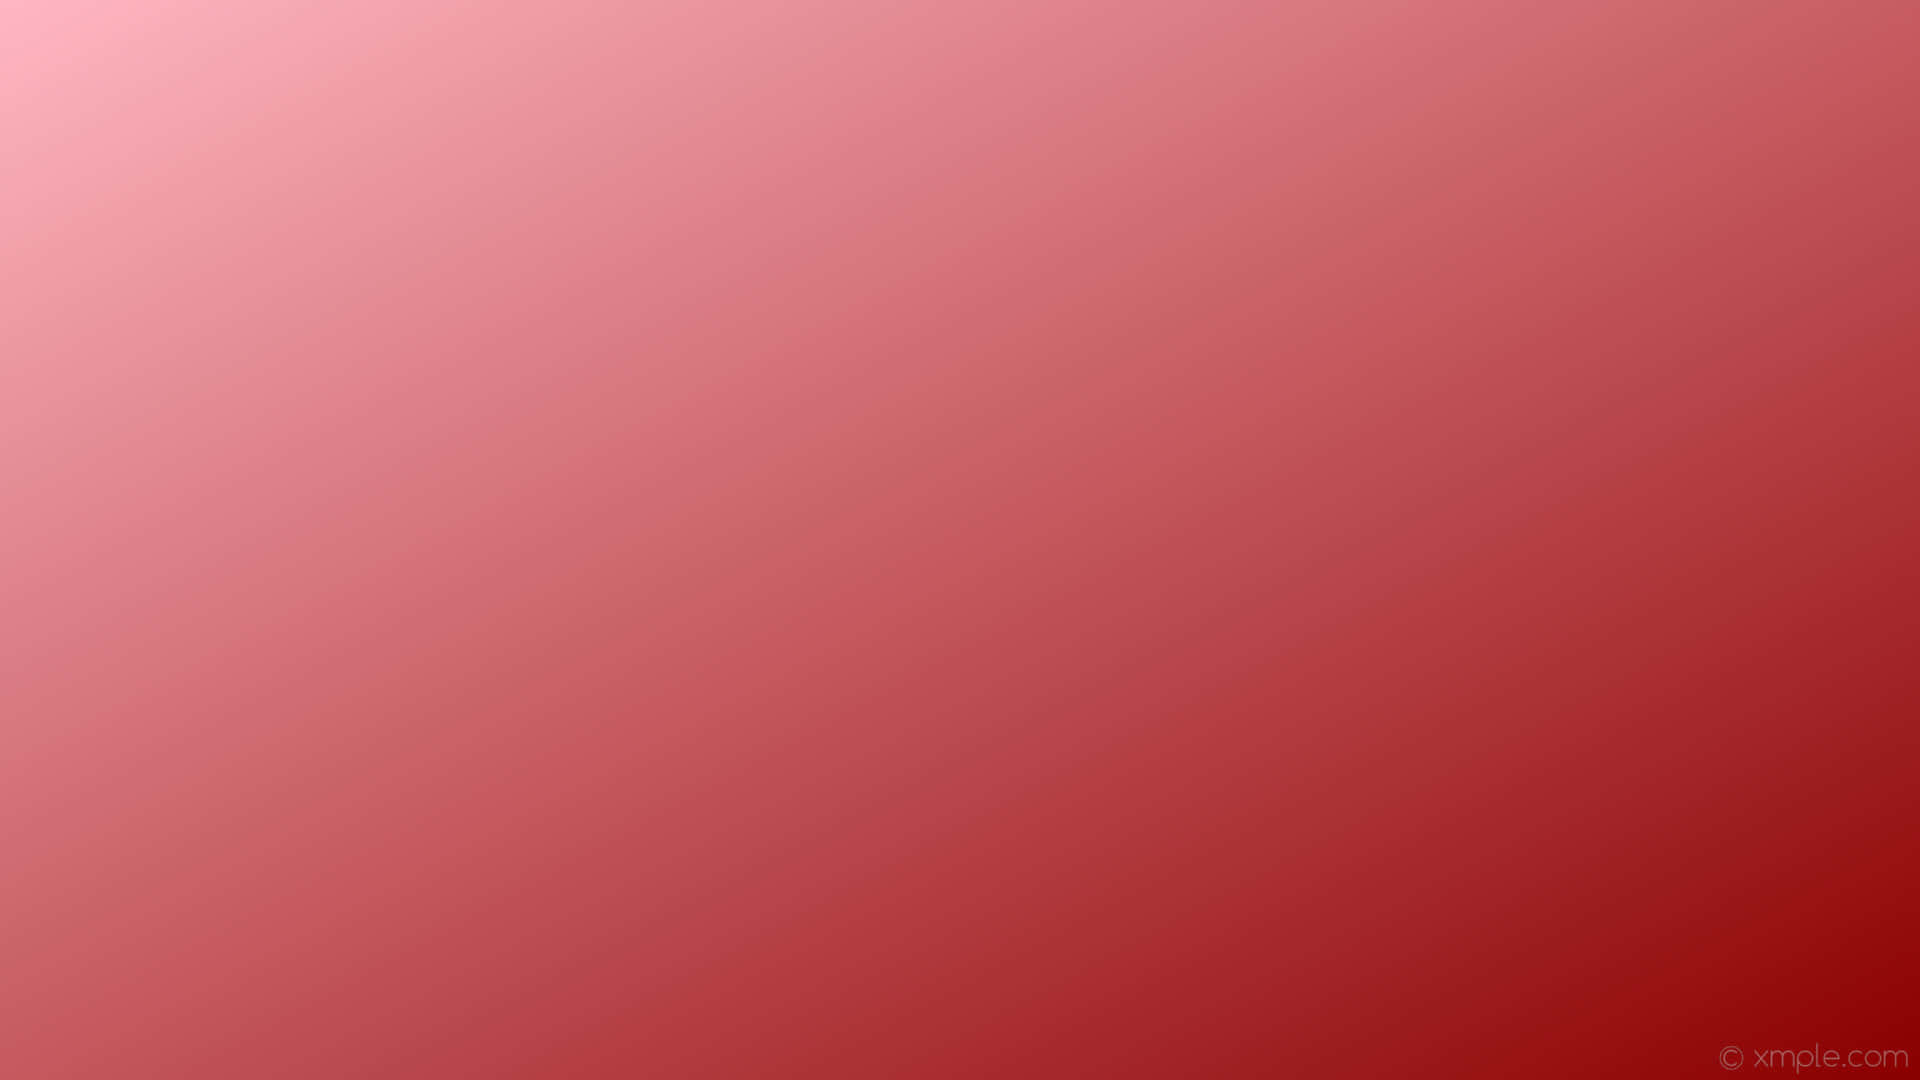 Solid farve rød gradient baggrund